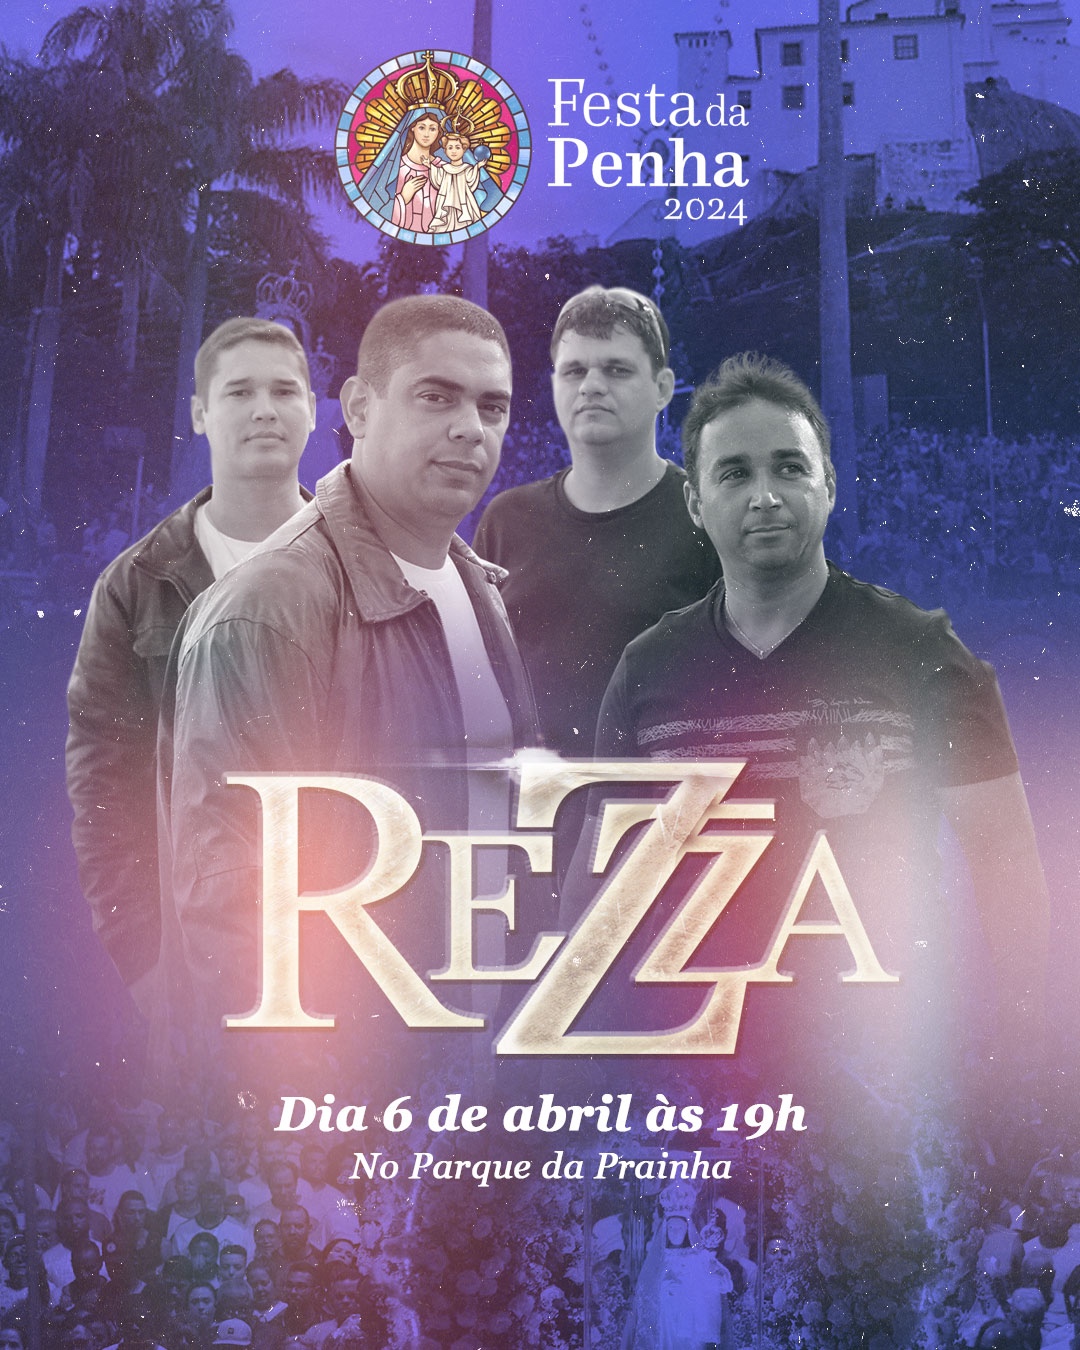 Banda Rezza vai animar a Romaria dos Homens na Festa da Penha